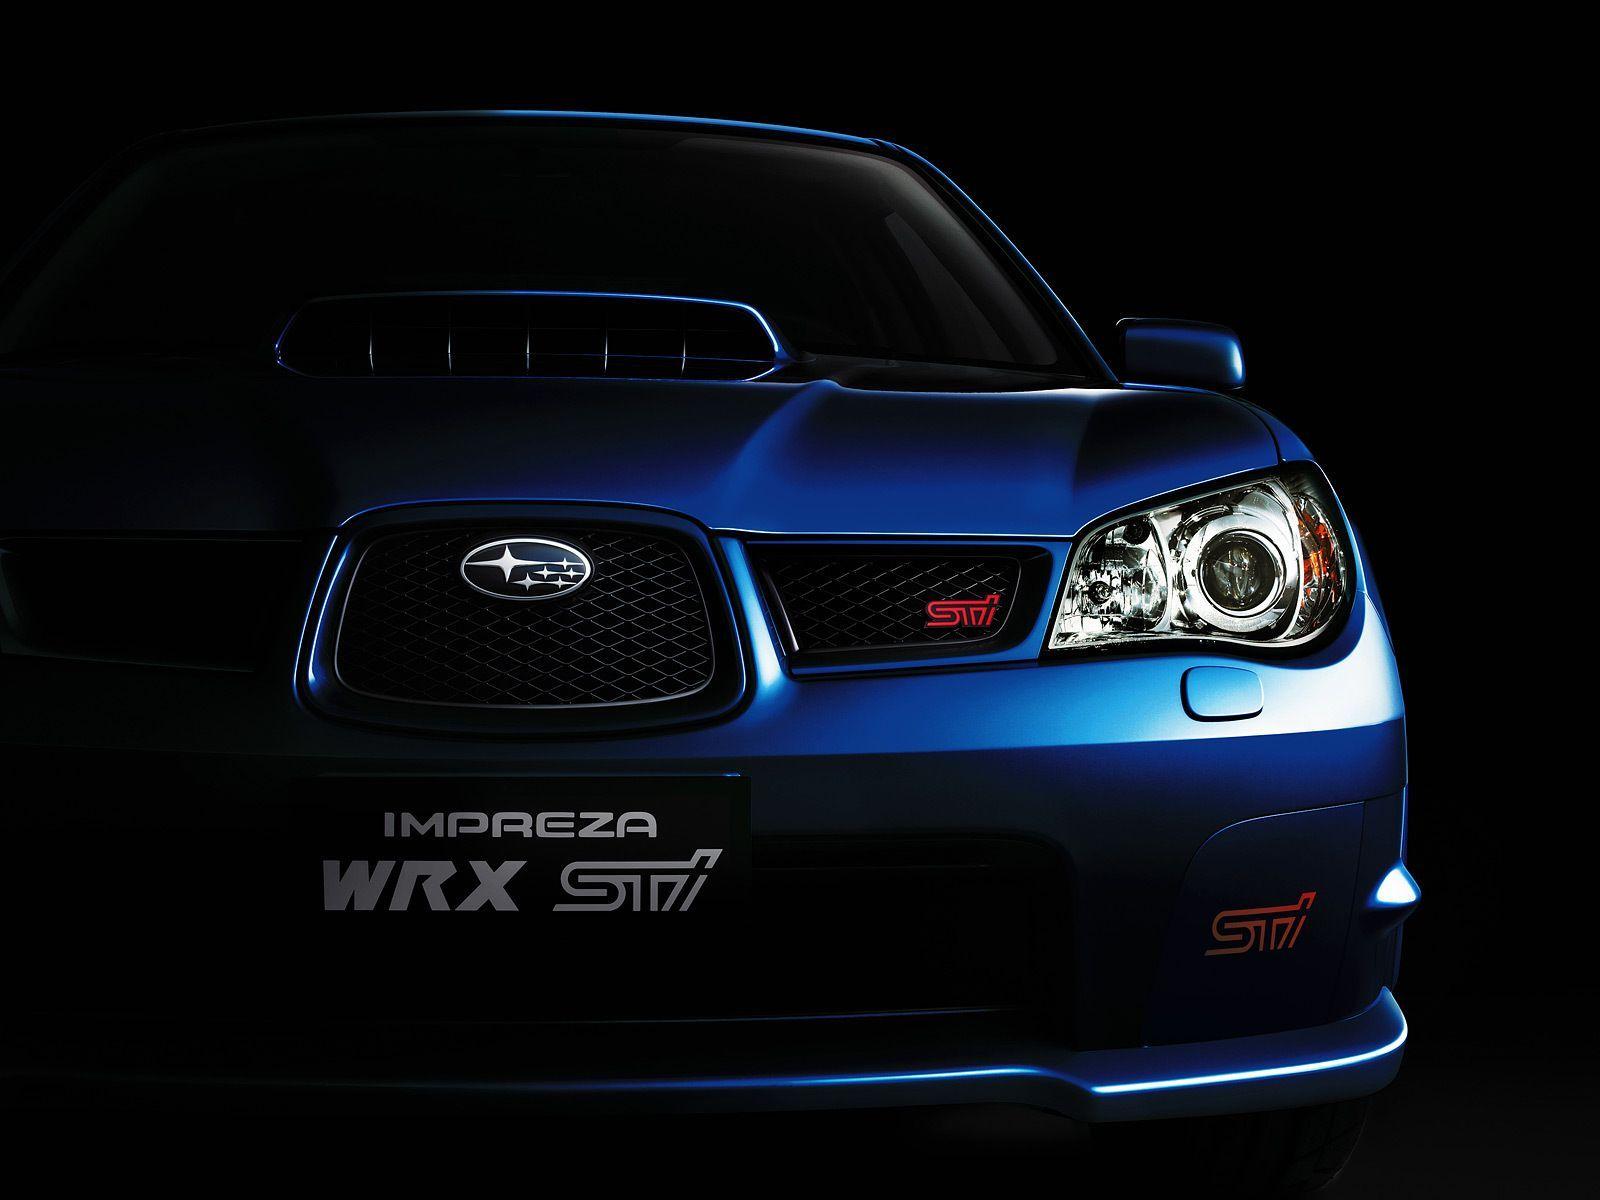 Impreza WRX STI Logo - Subaru Wrx Logo Wallpaper Subaru wrx sti motion x. Impreza wrx